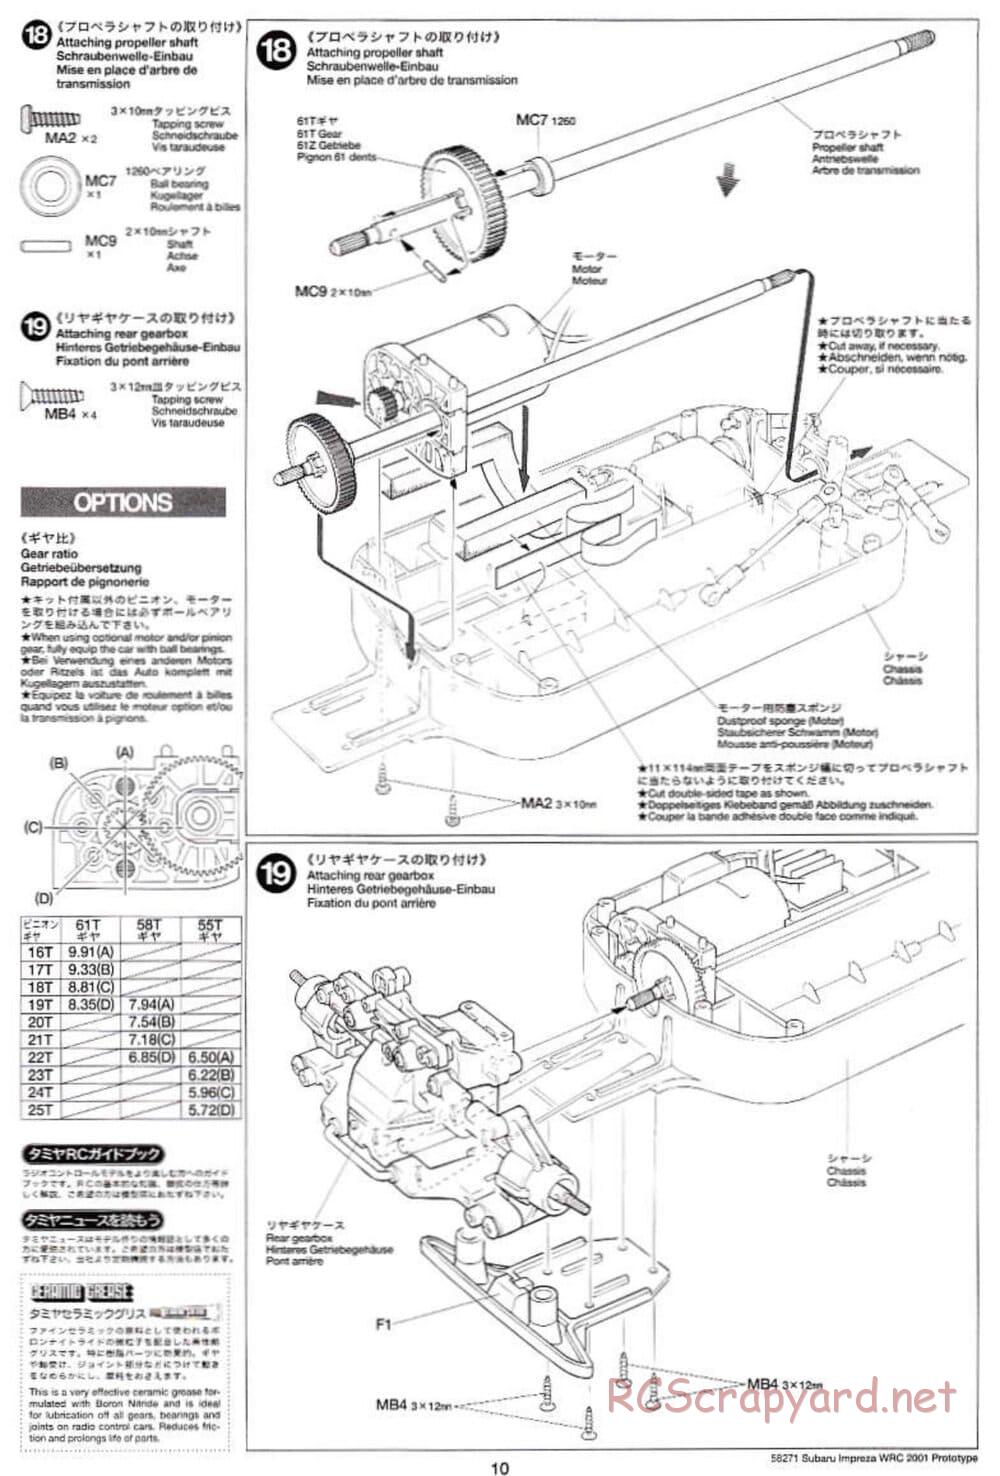 Tamiya - Subaru Impreza WRC 2001 Prototype - TB-01 Chassis - Manual - Page 10